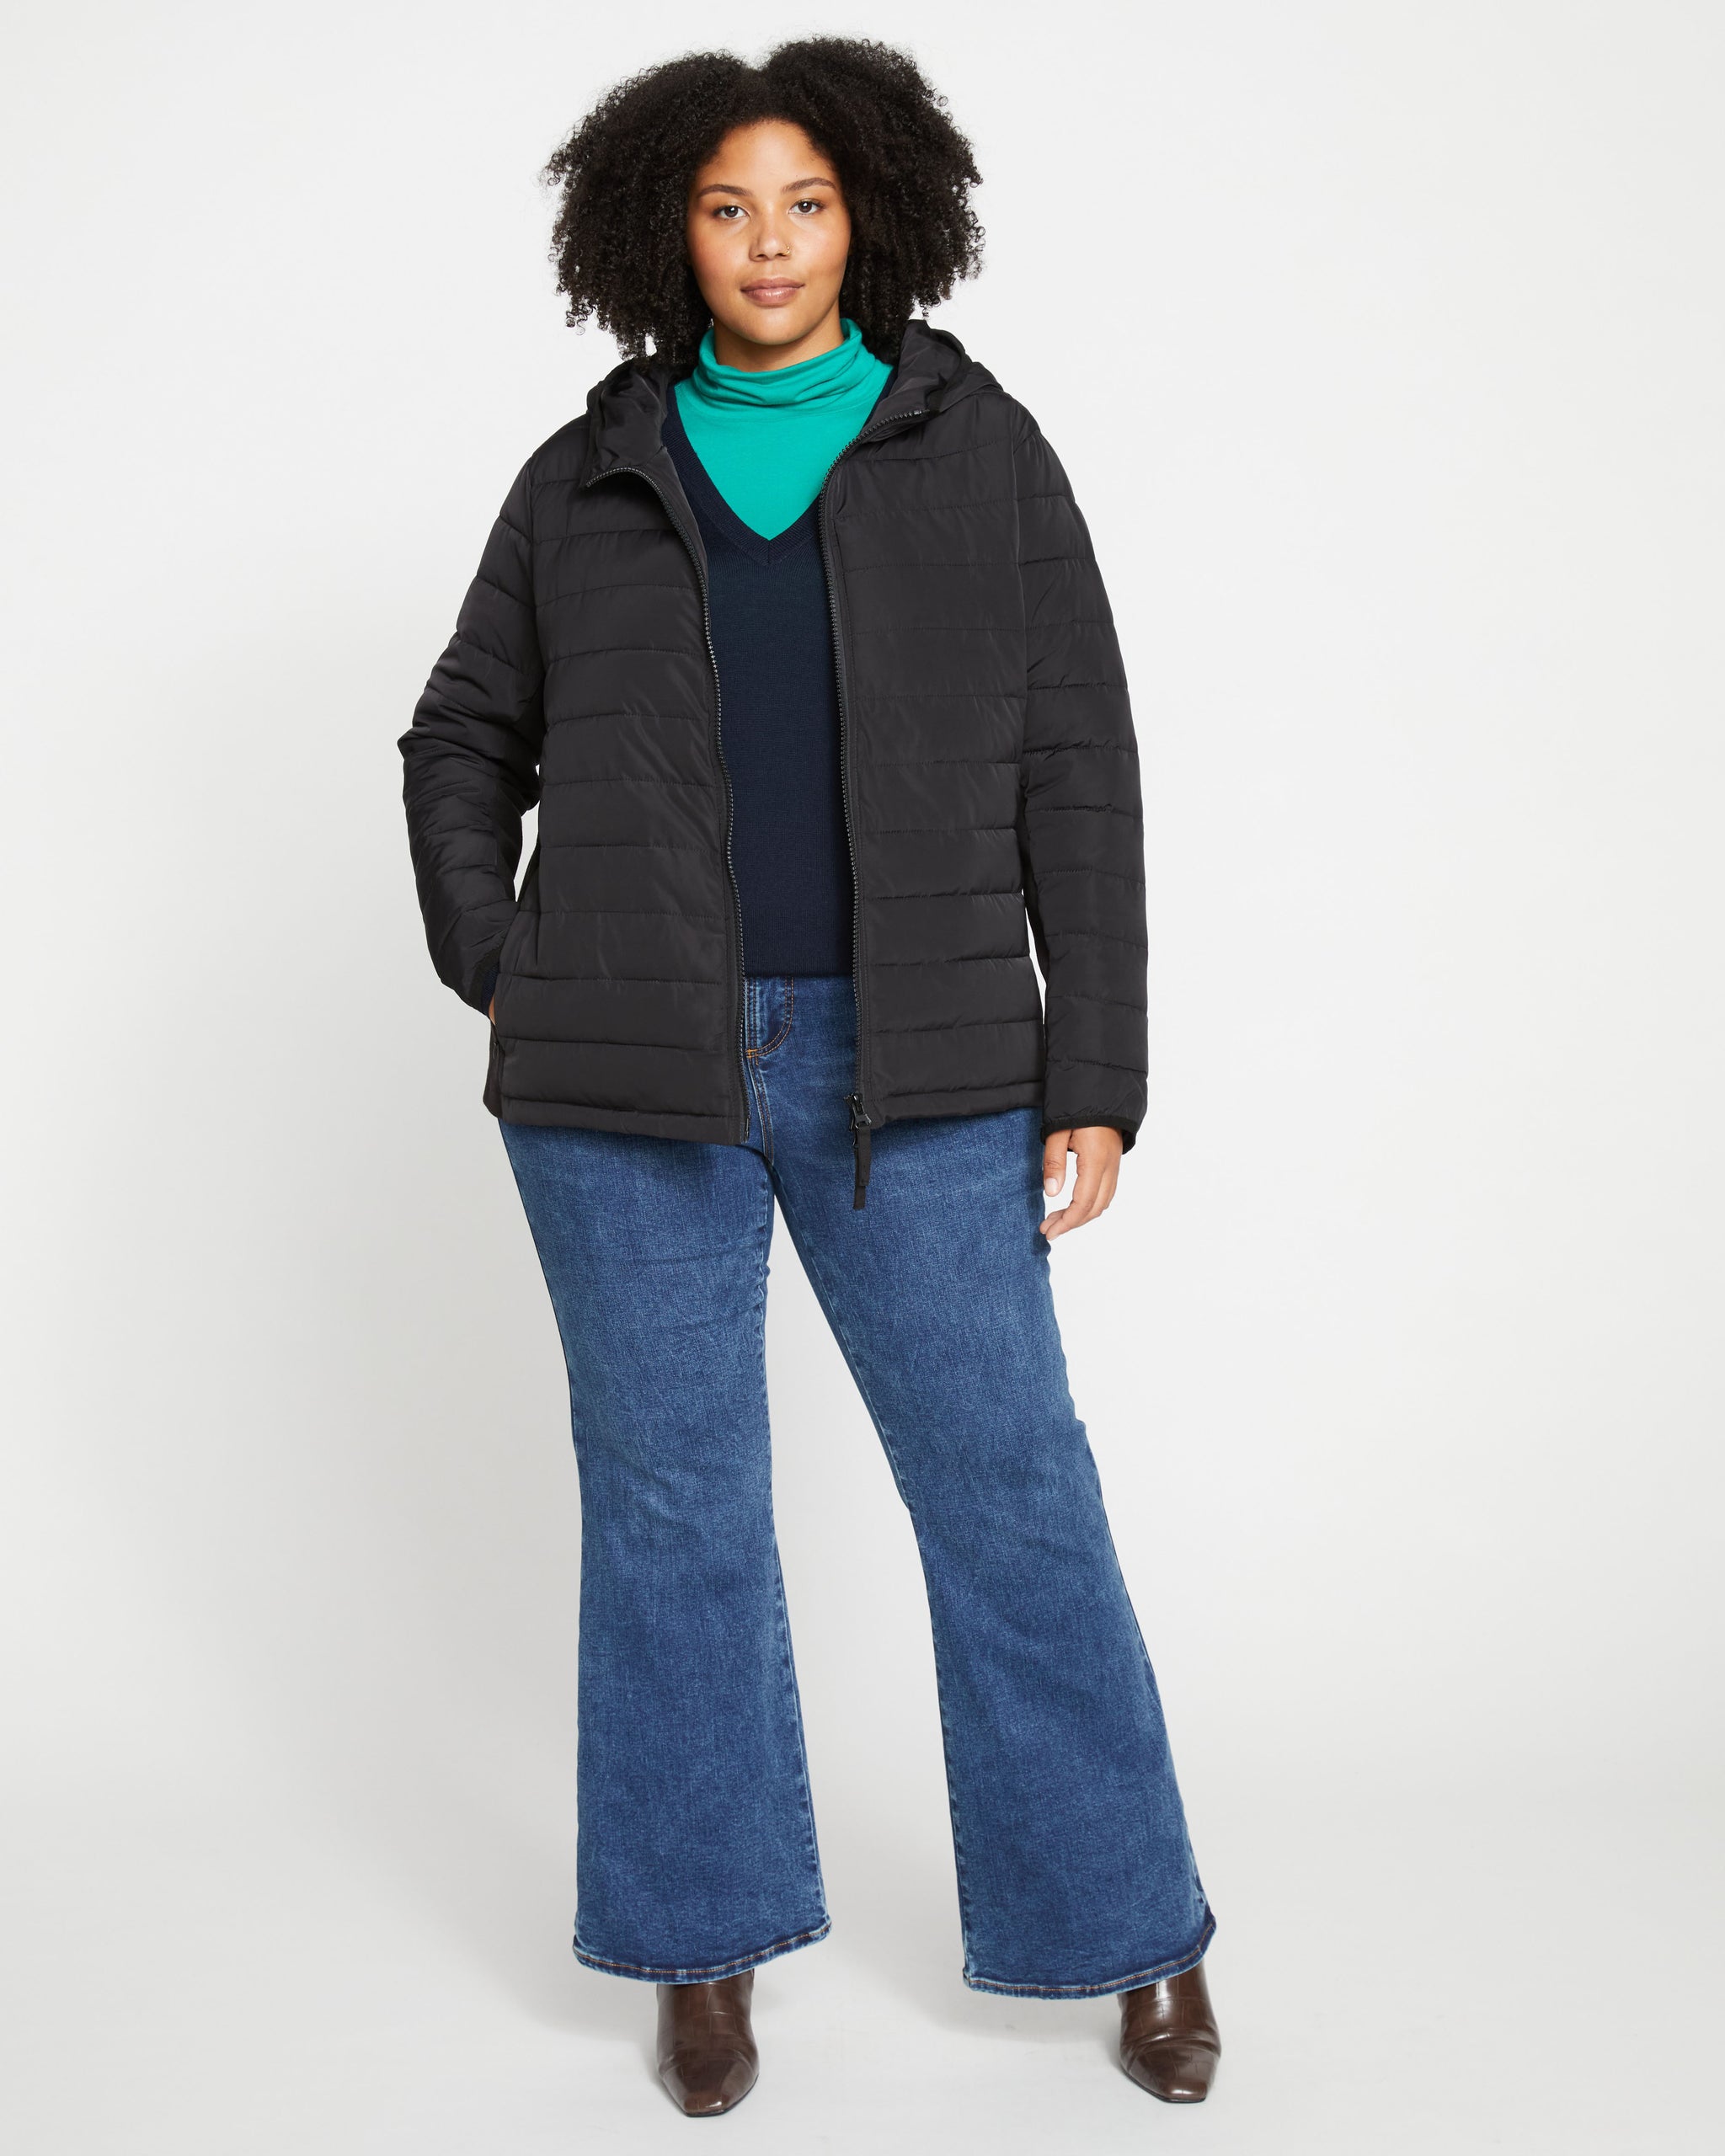 Women's Lululemon Light down jacket, size 34 (Blue)